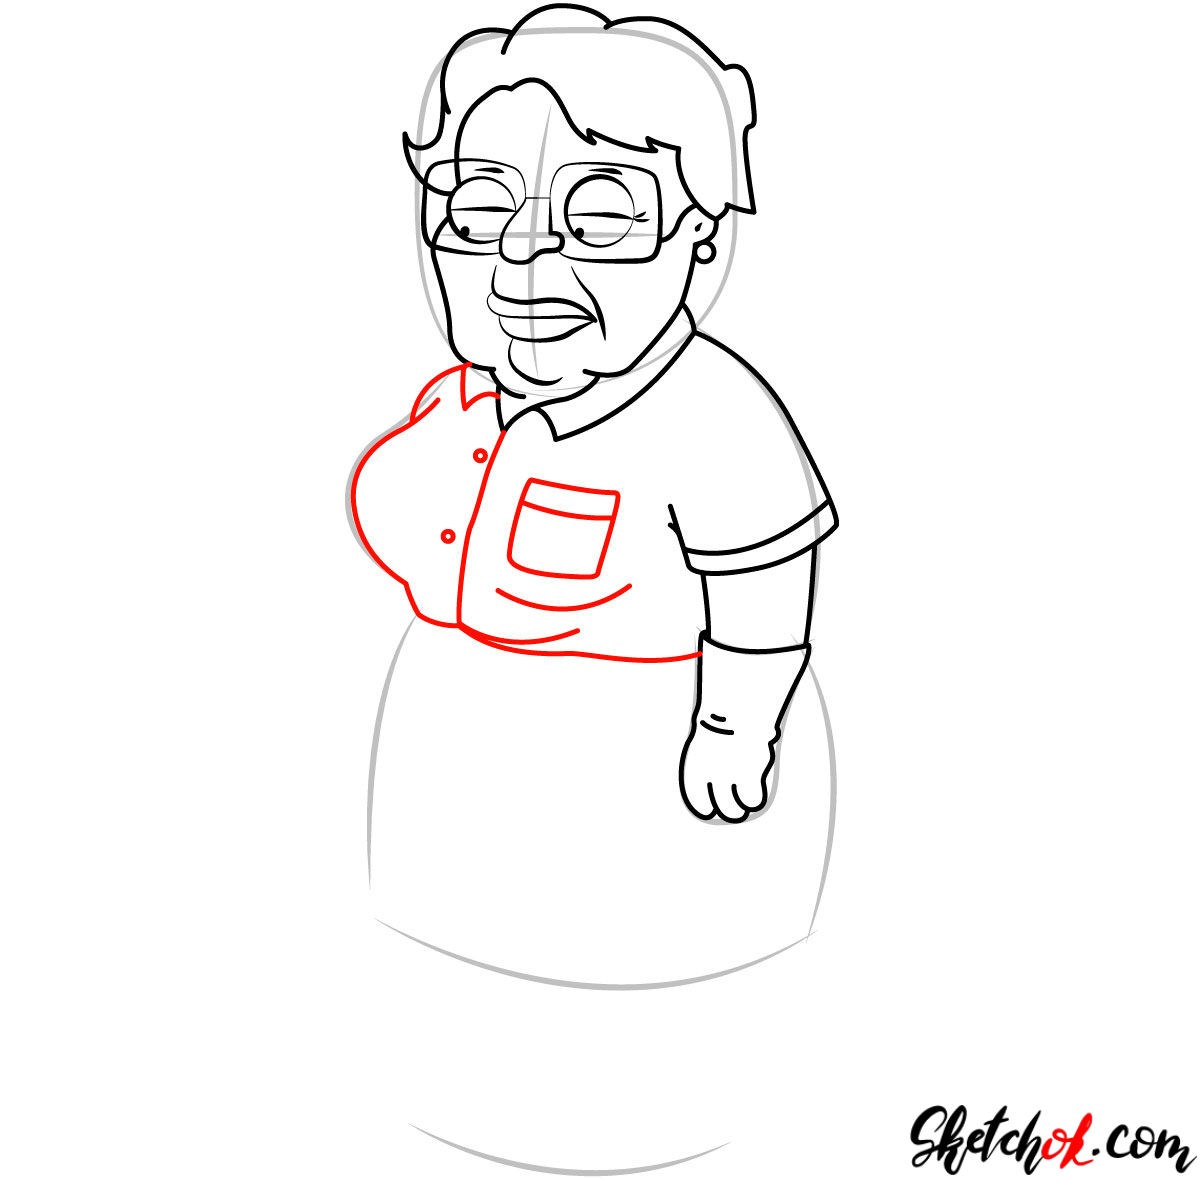 How to draw Consuela (Family Guy) - step 06